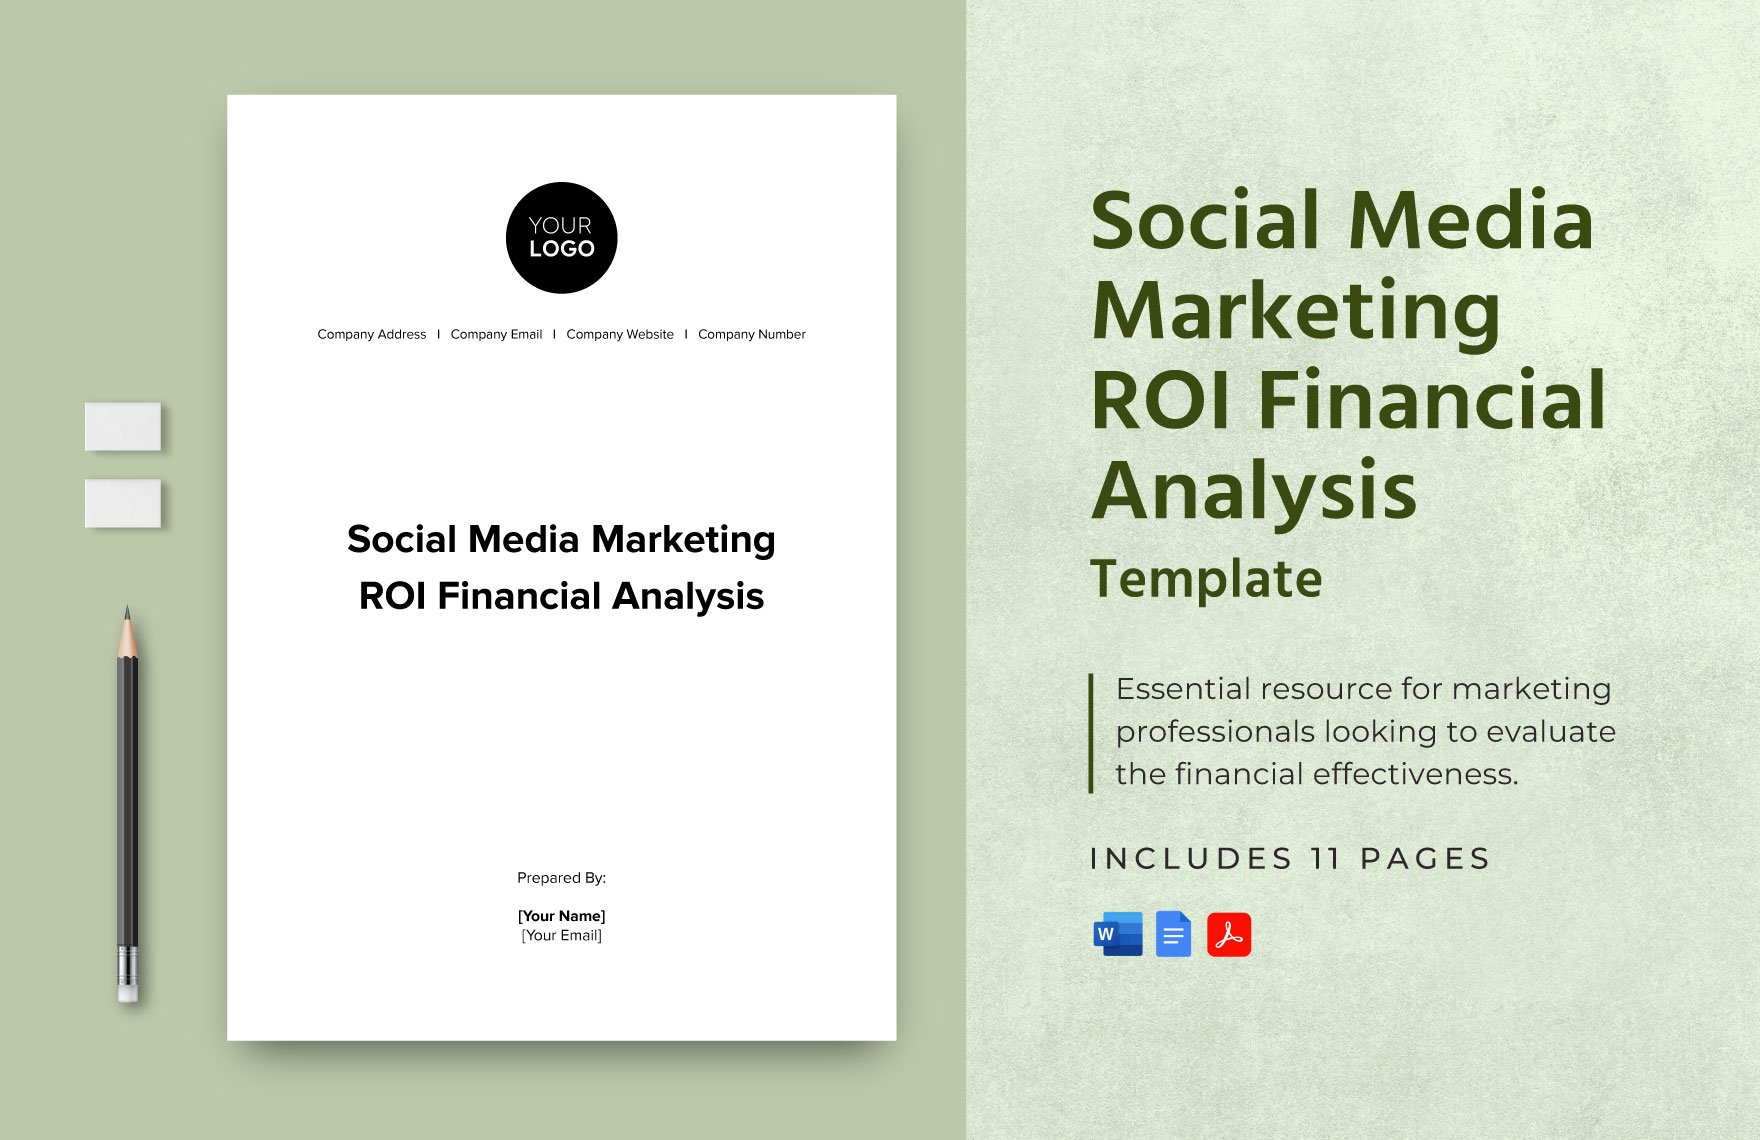 Social Media Marketing ROI Financial Analysis Template